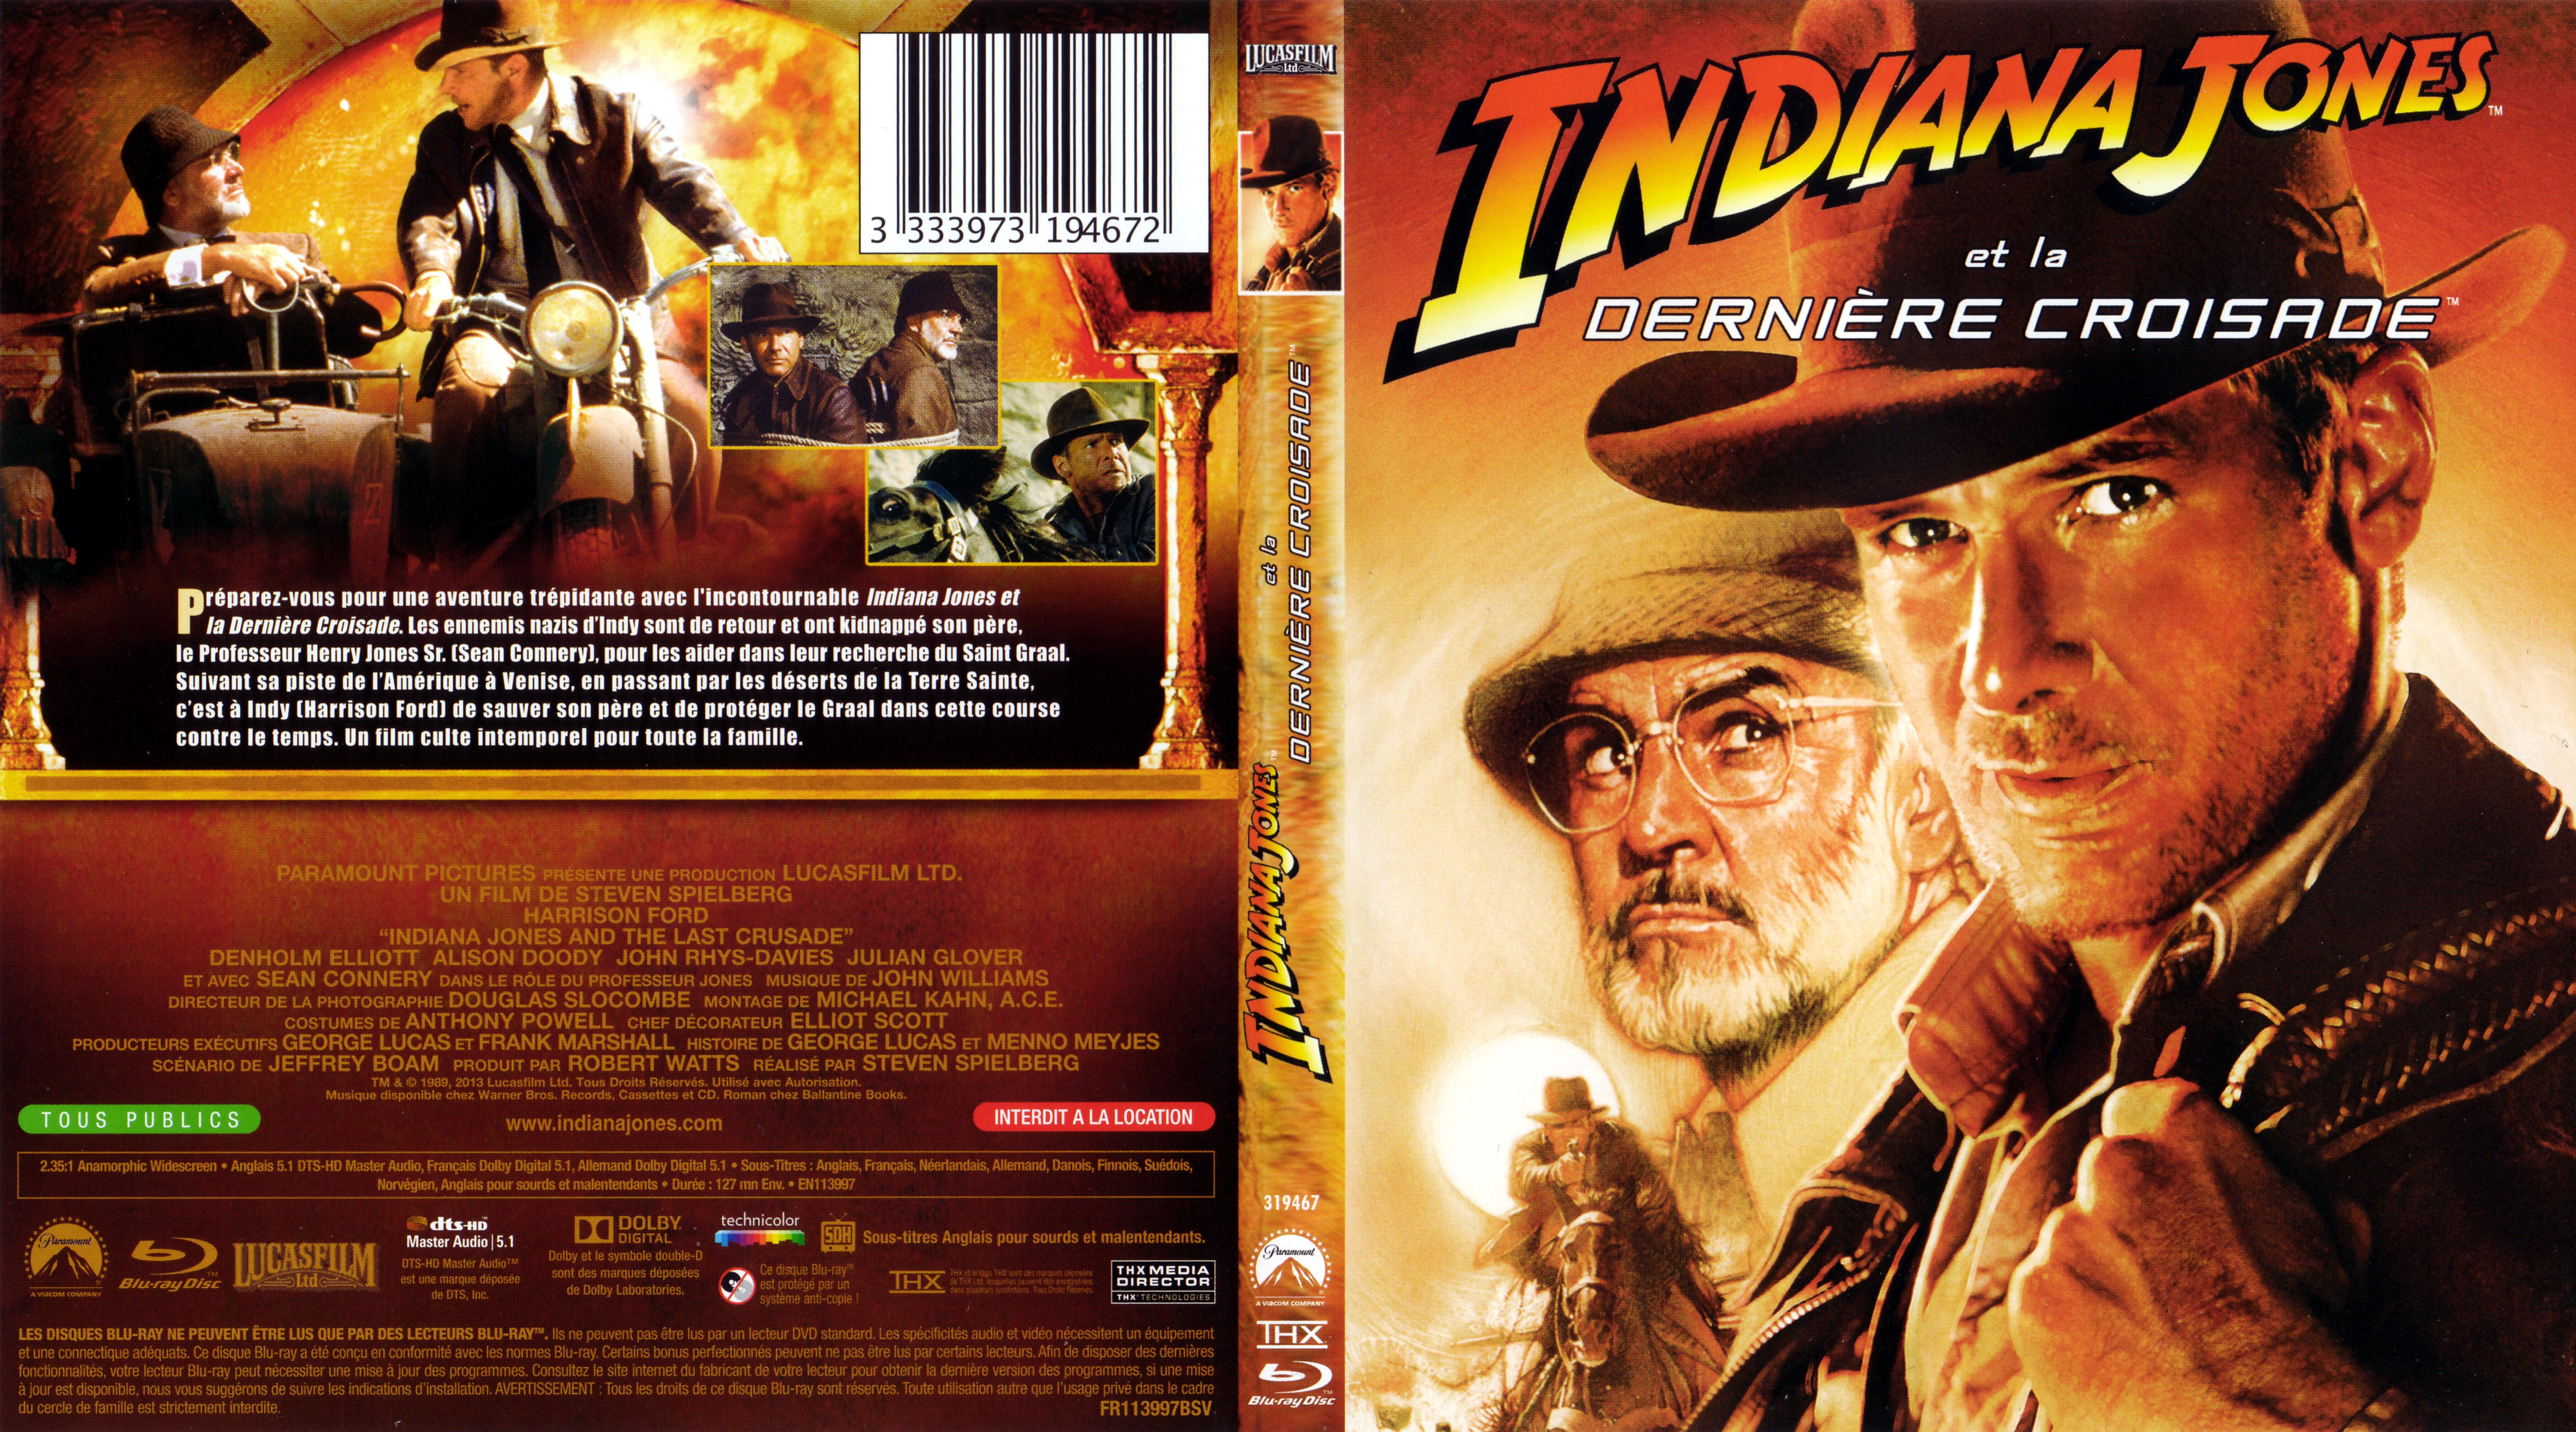 Jaquette DVD Indiana Jones et la derniere croisade (BLU-RAY)